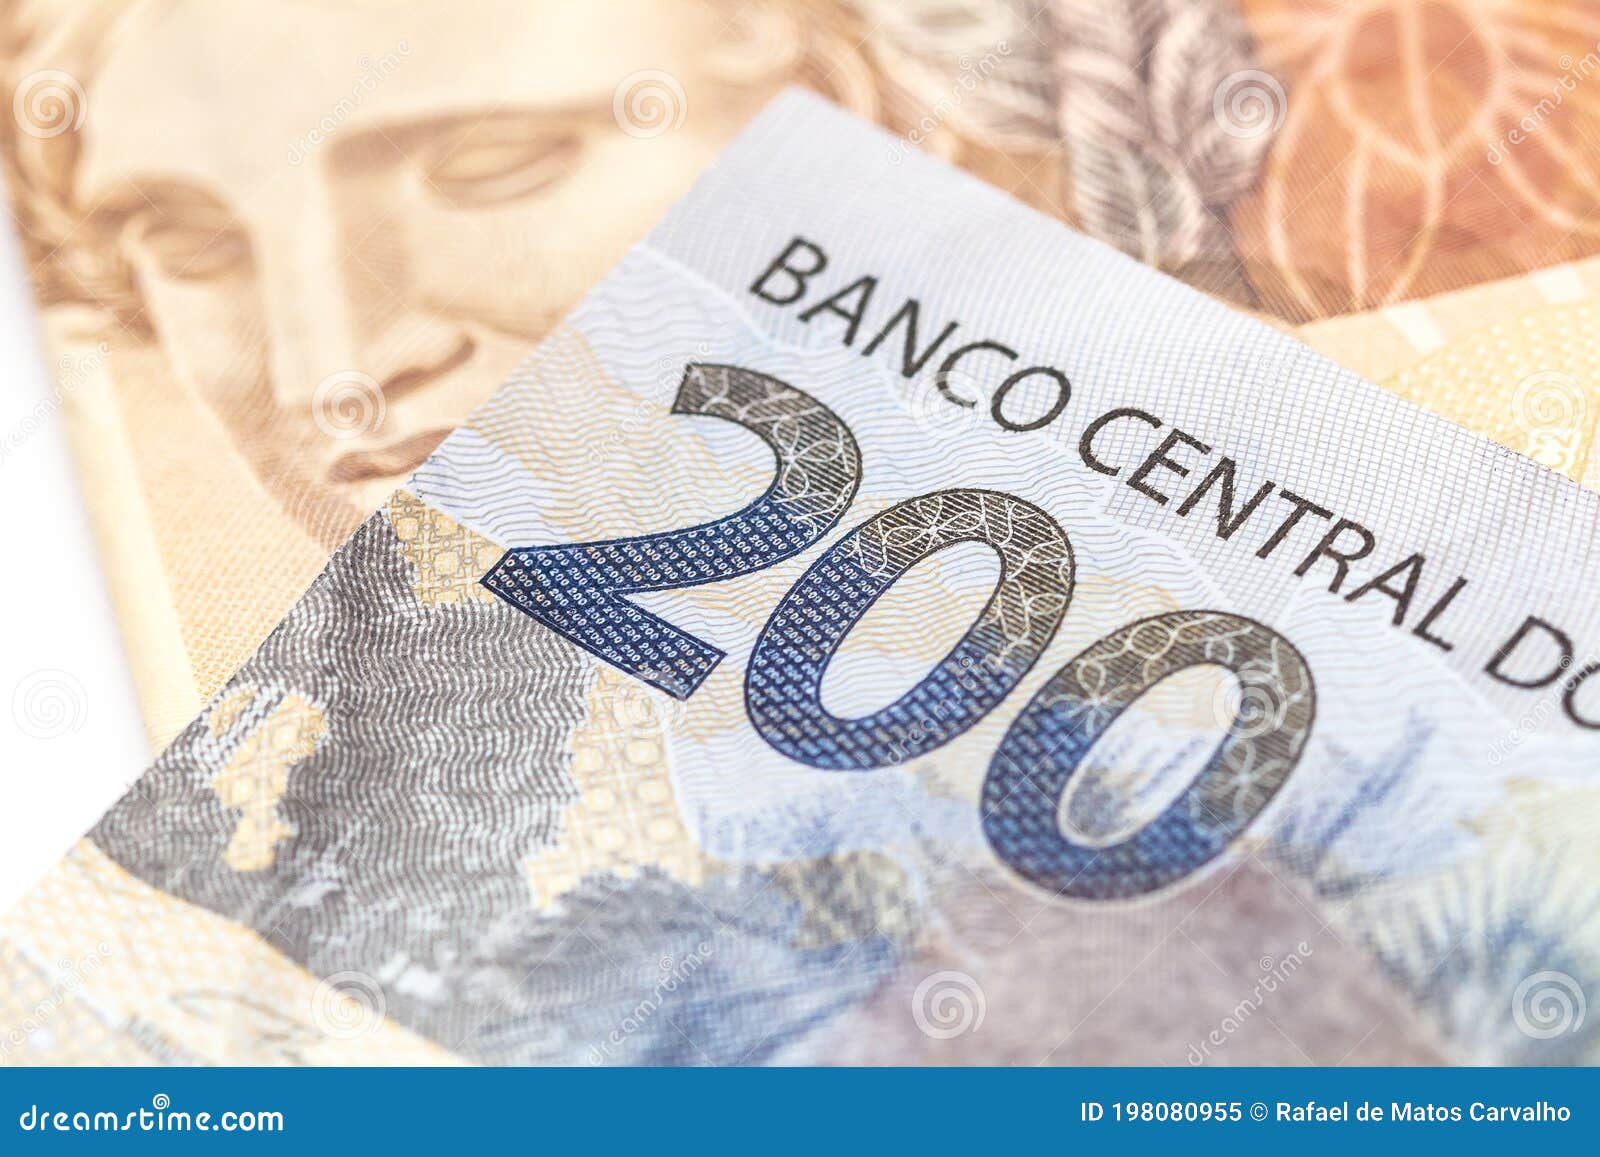 real, brazilian currency. money, brazil, dinheiro, brasil, reais.